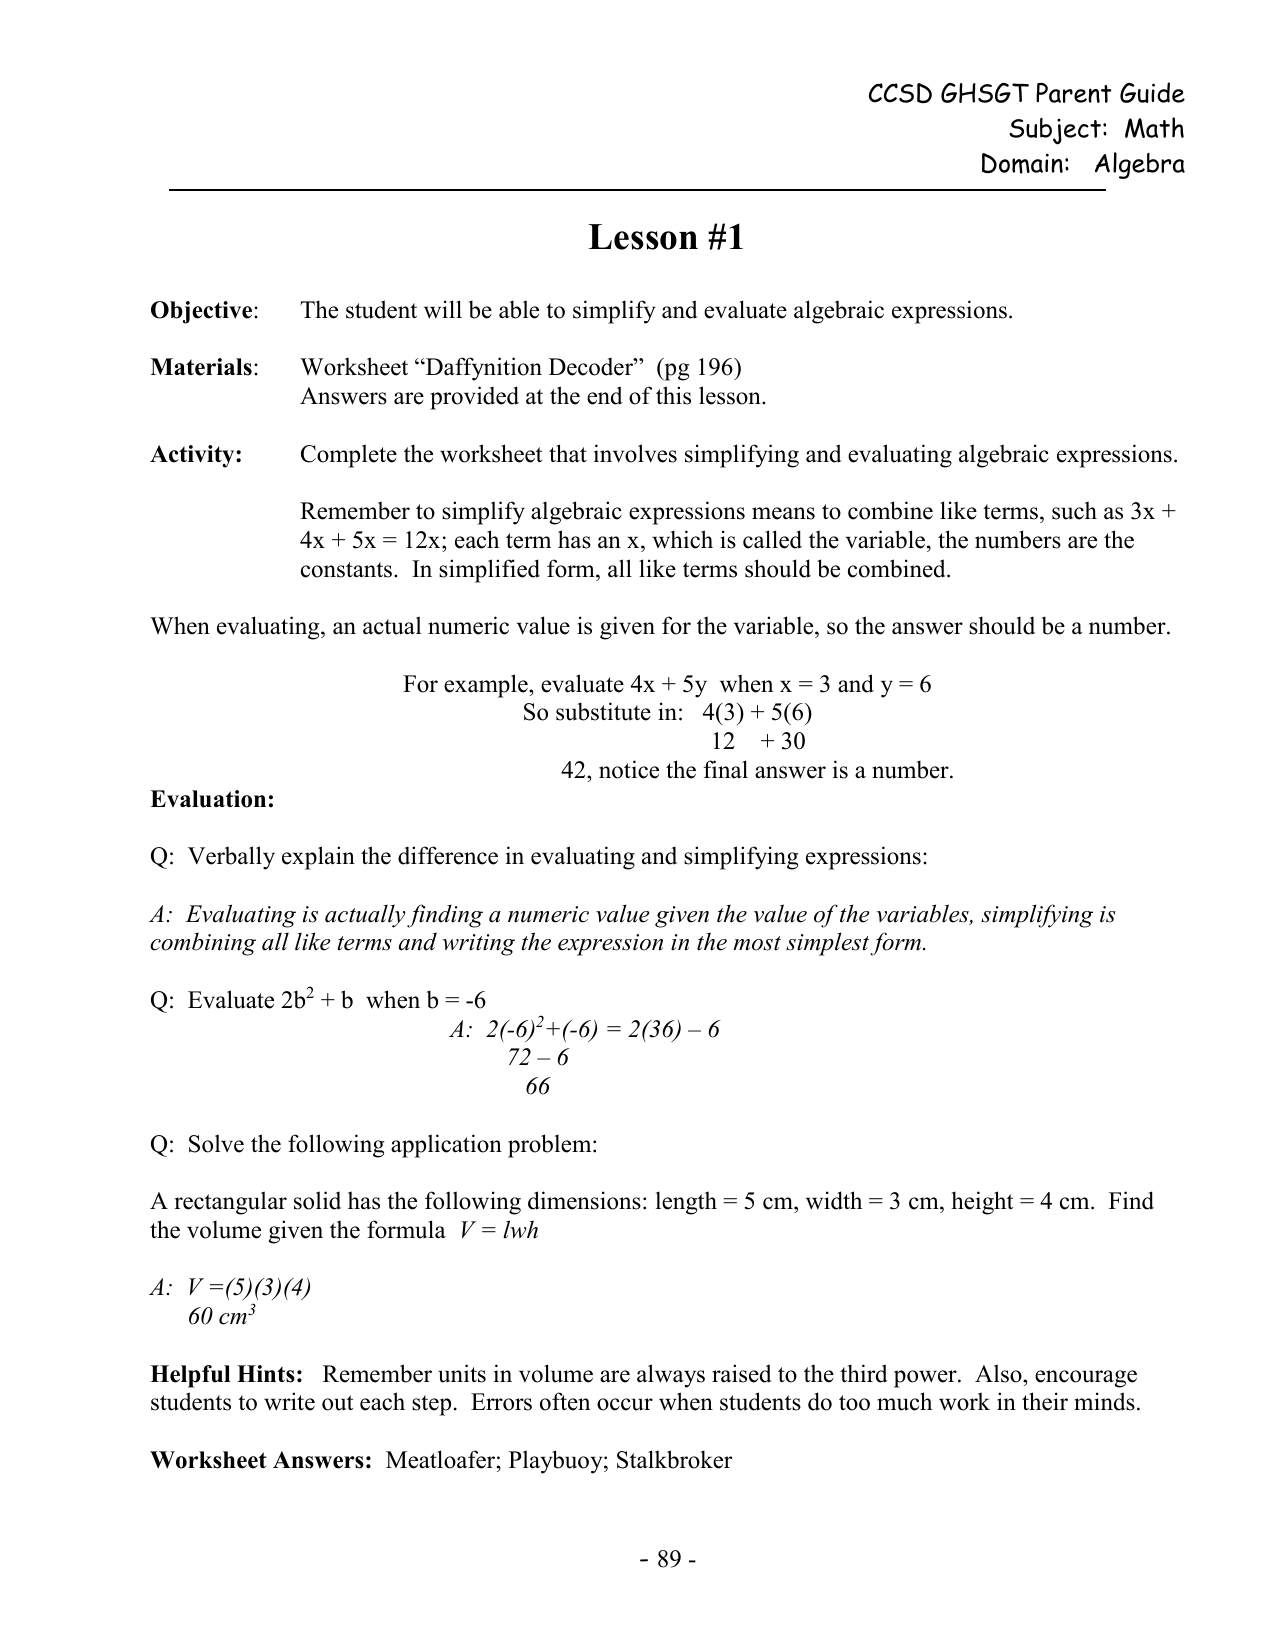 Algebra - McEachern High School With Regard To Simplifying Algebraic Expressions Worksheet Answers